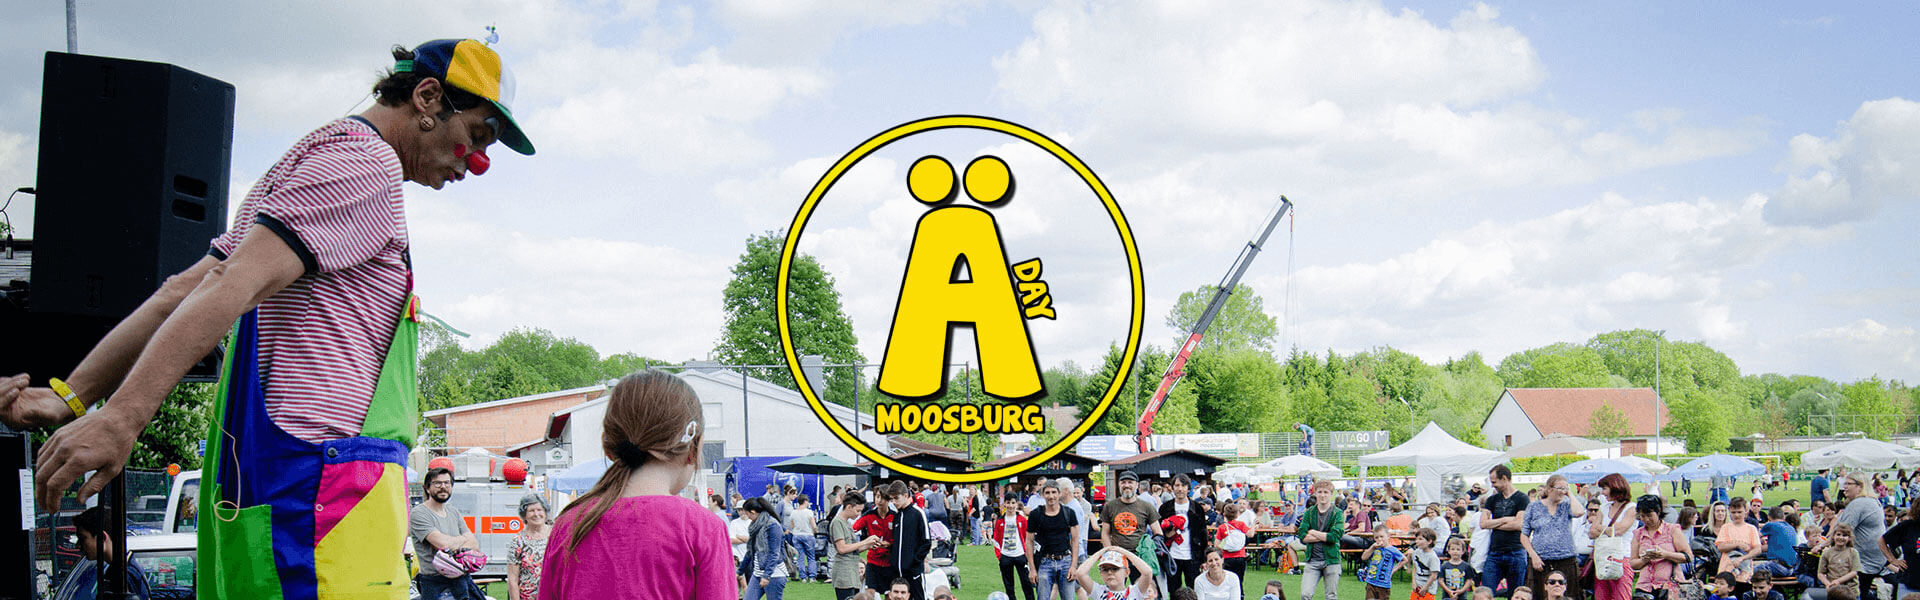 aektschnday-moosburg-banner